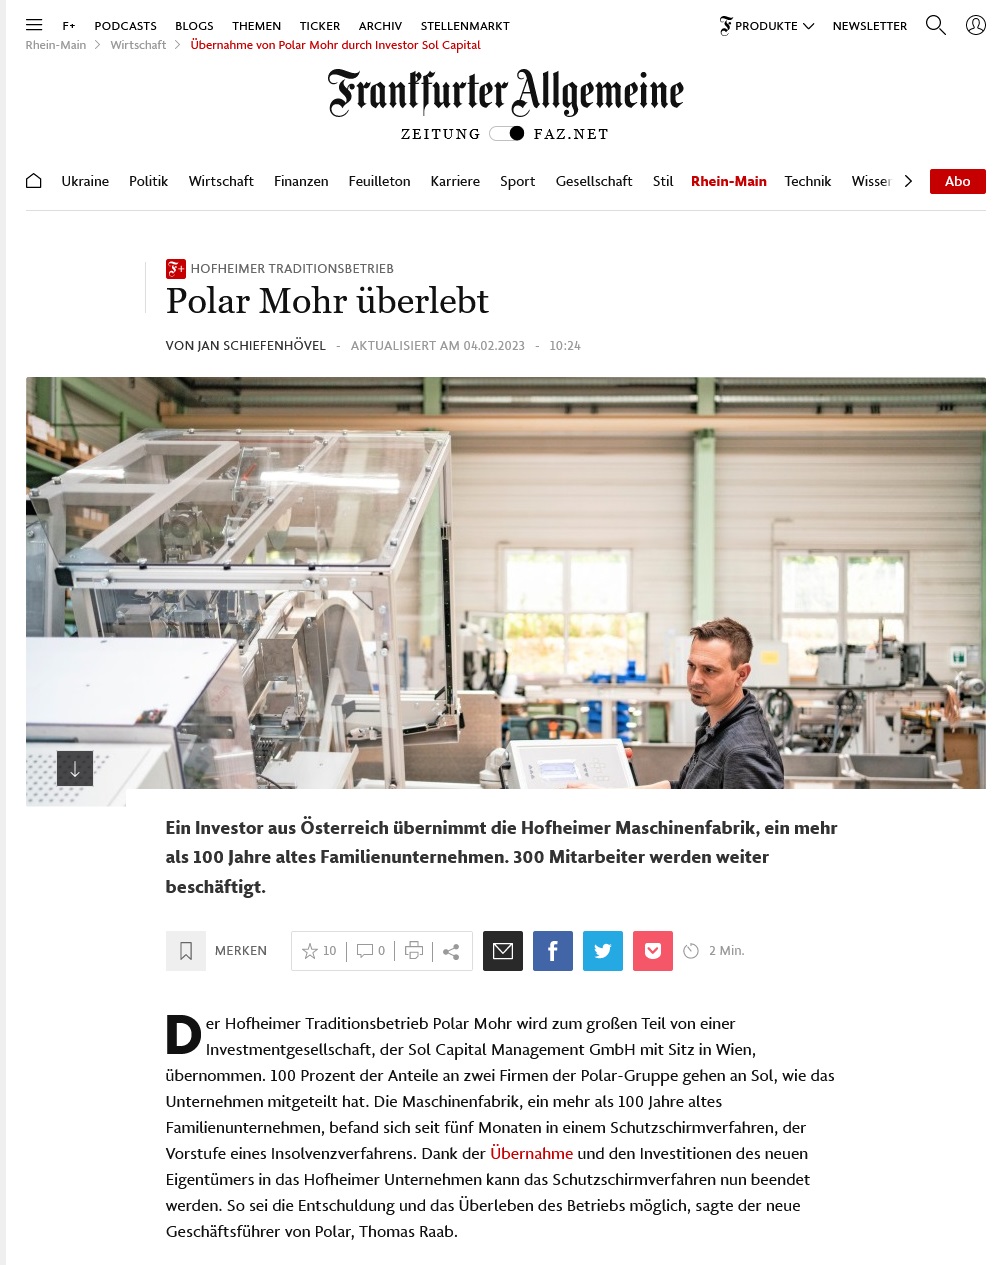 Faz.net: Hofheimer Traditionsbetrieb – Polar Mohr überlebt